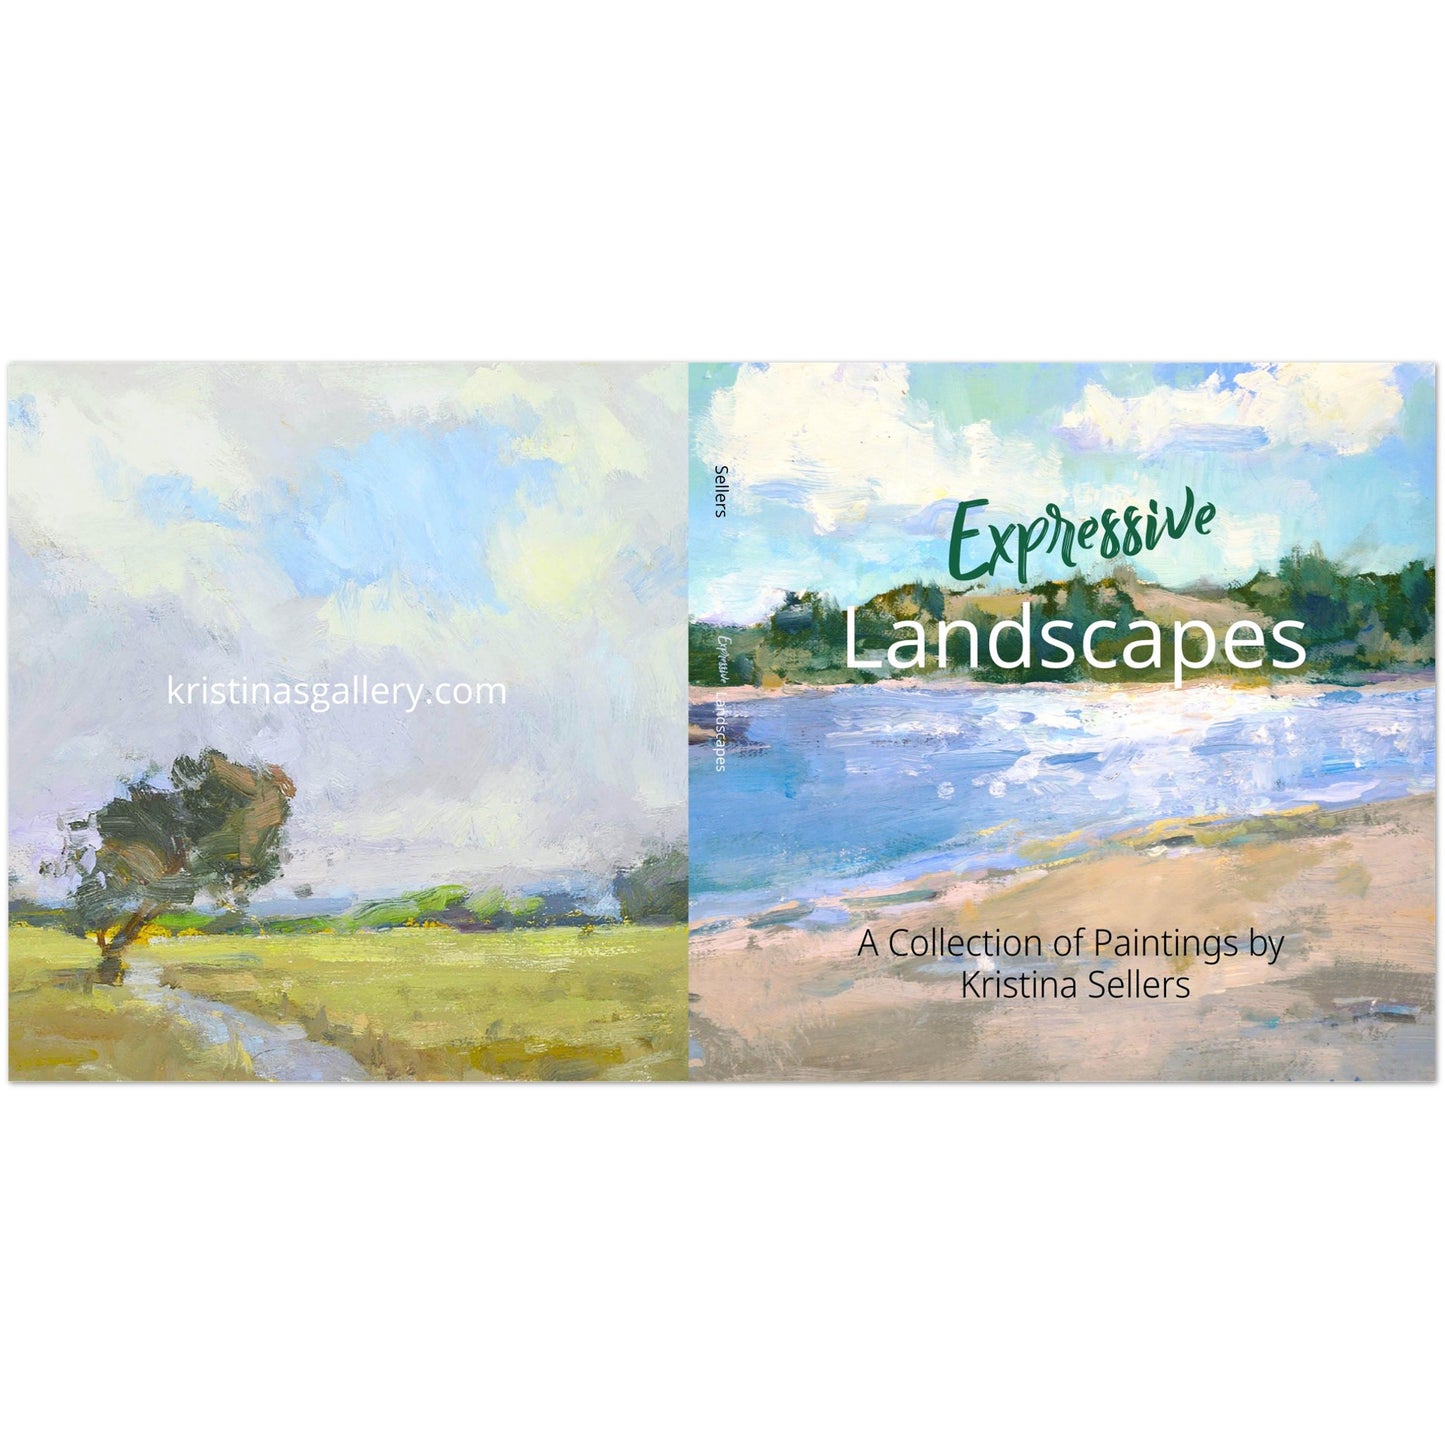 "Expressive Landscapes", by Kristina Sellers